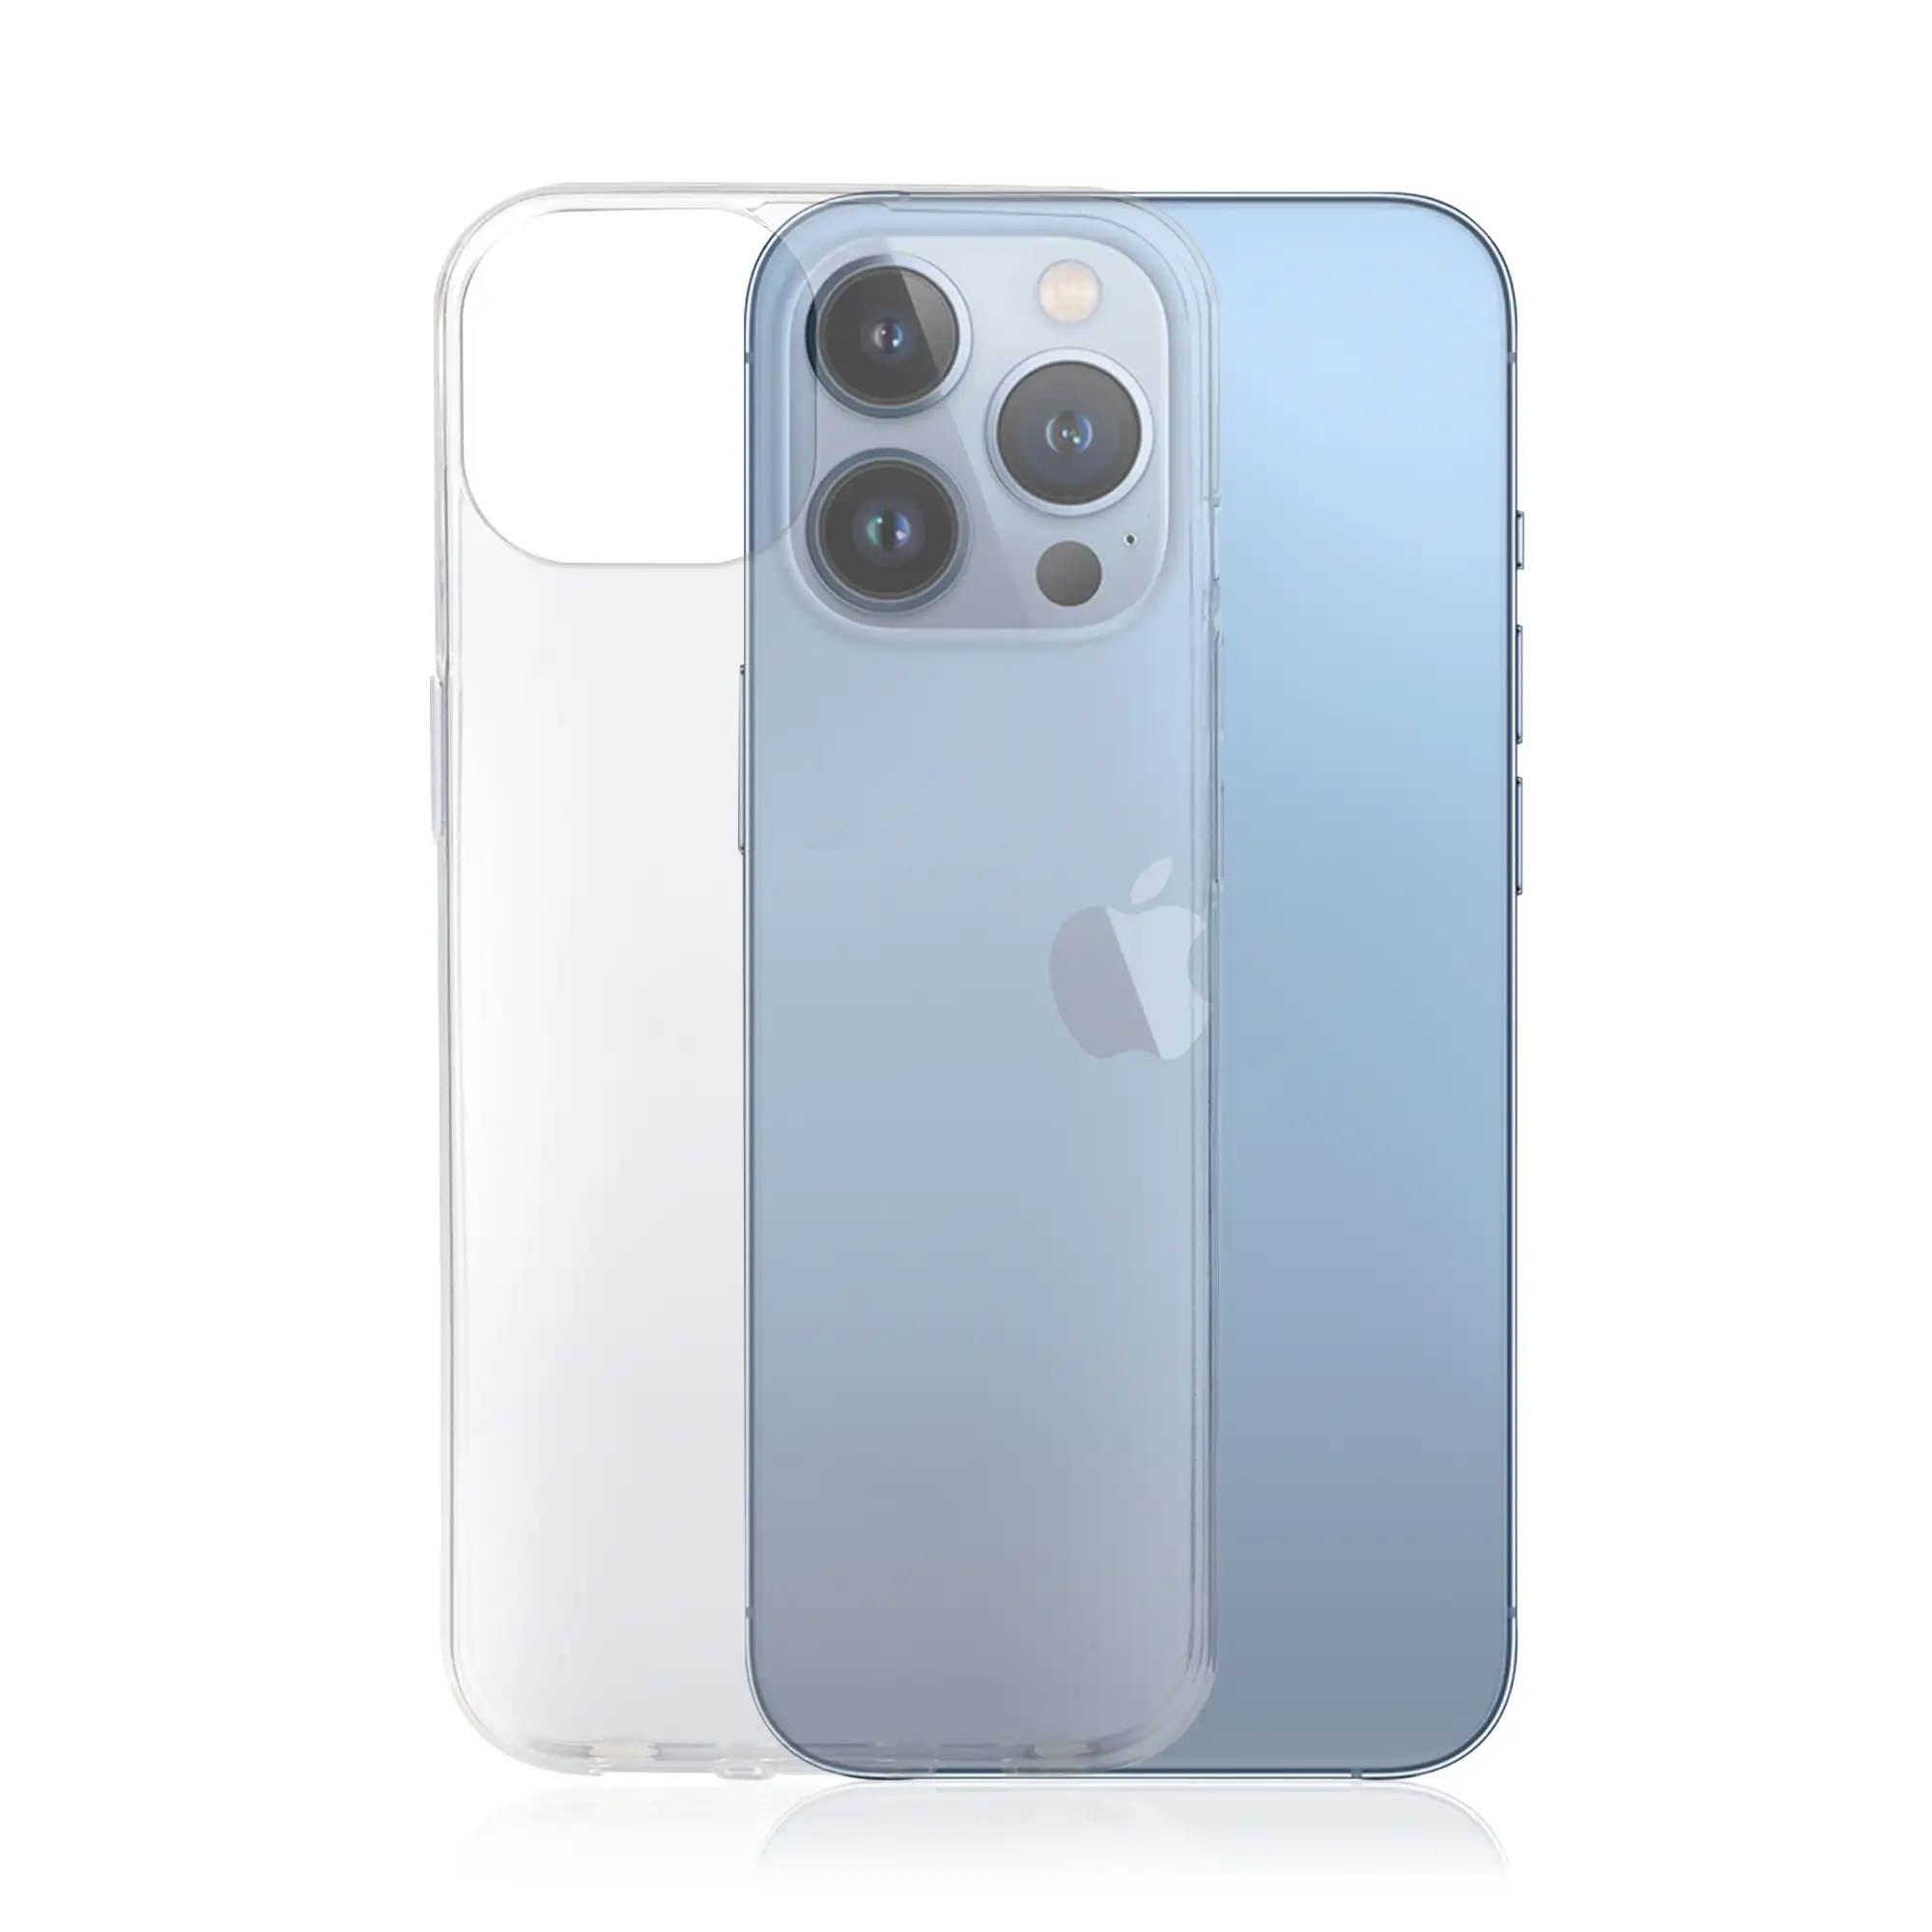 Carcasa Slim Crystal Clear de TPU transparente para iPhone 13 Pro.